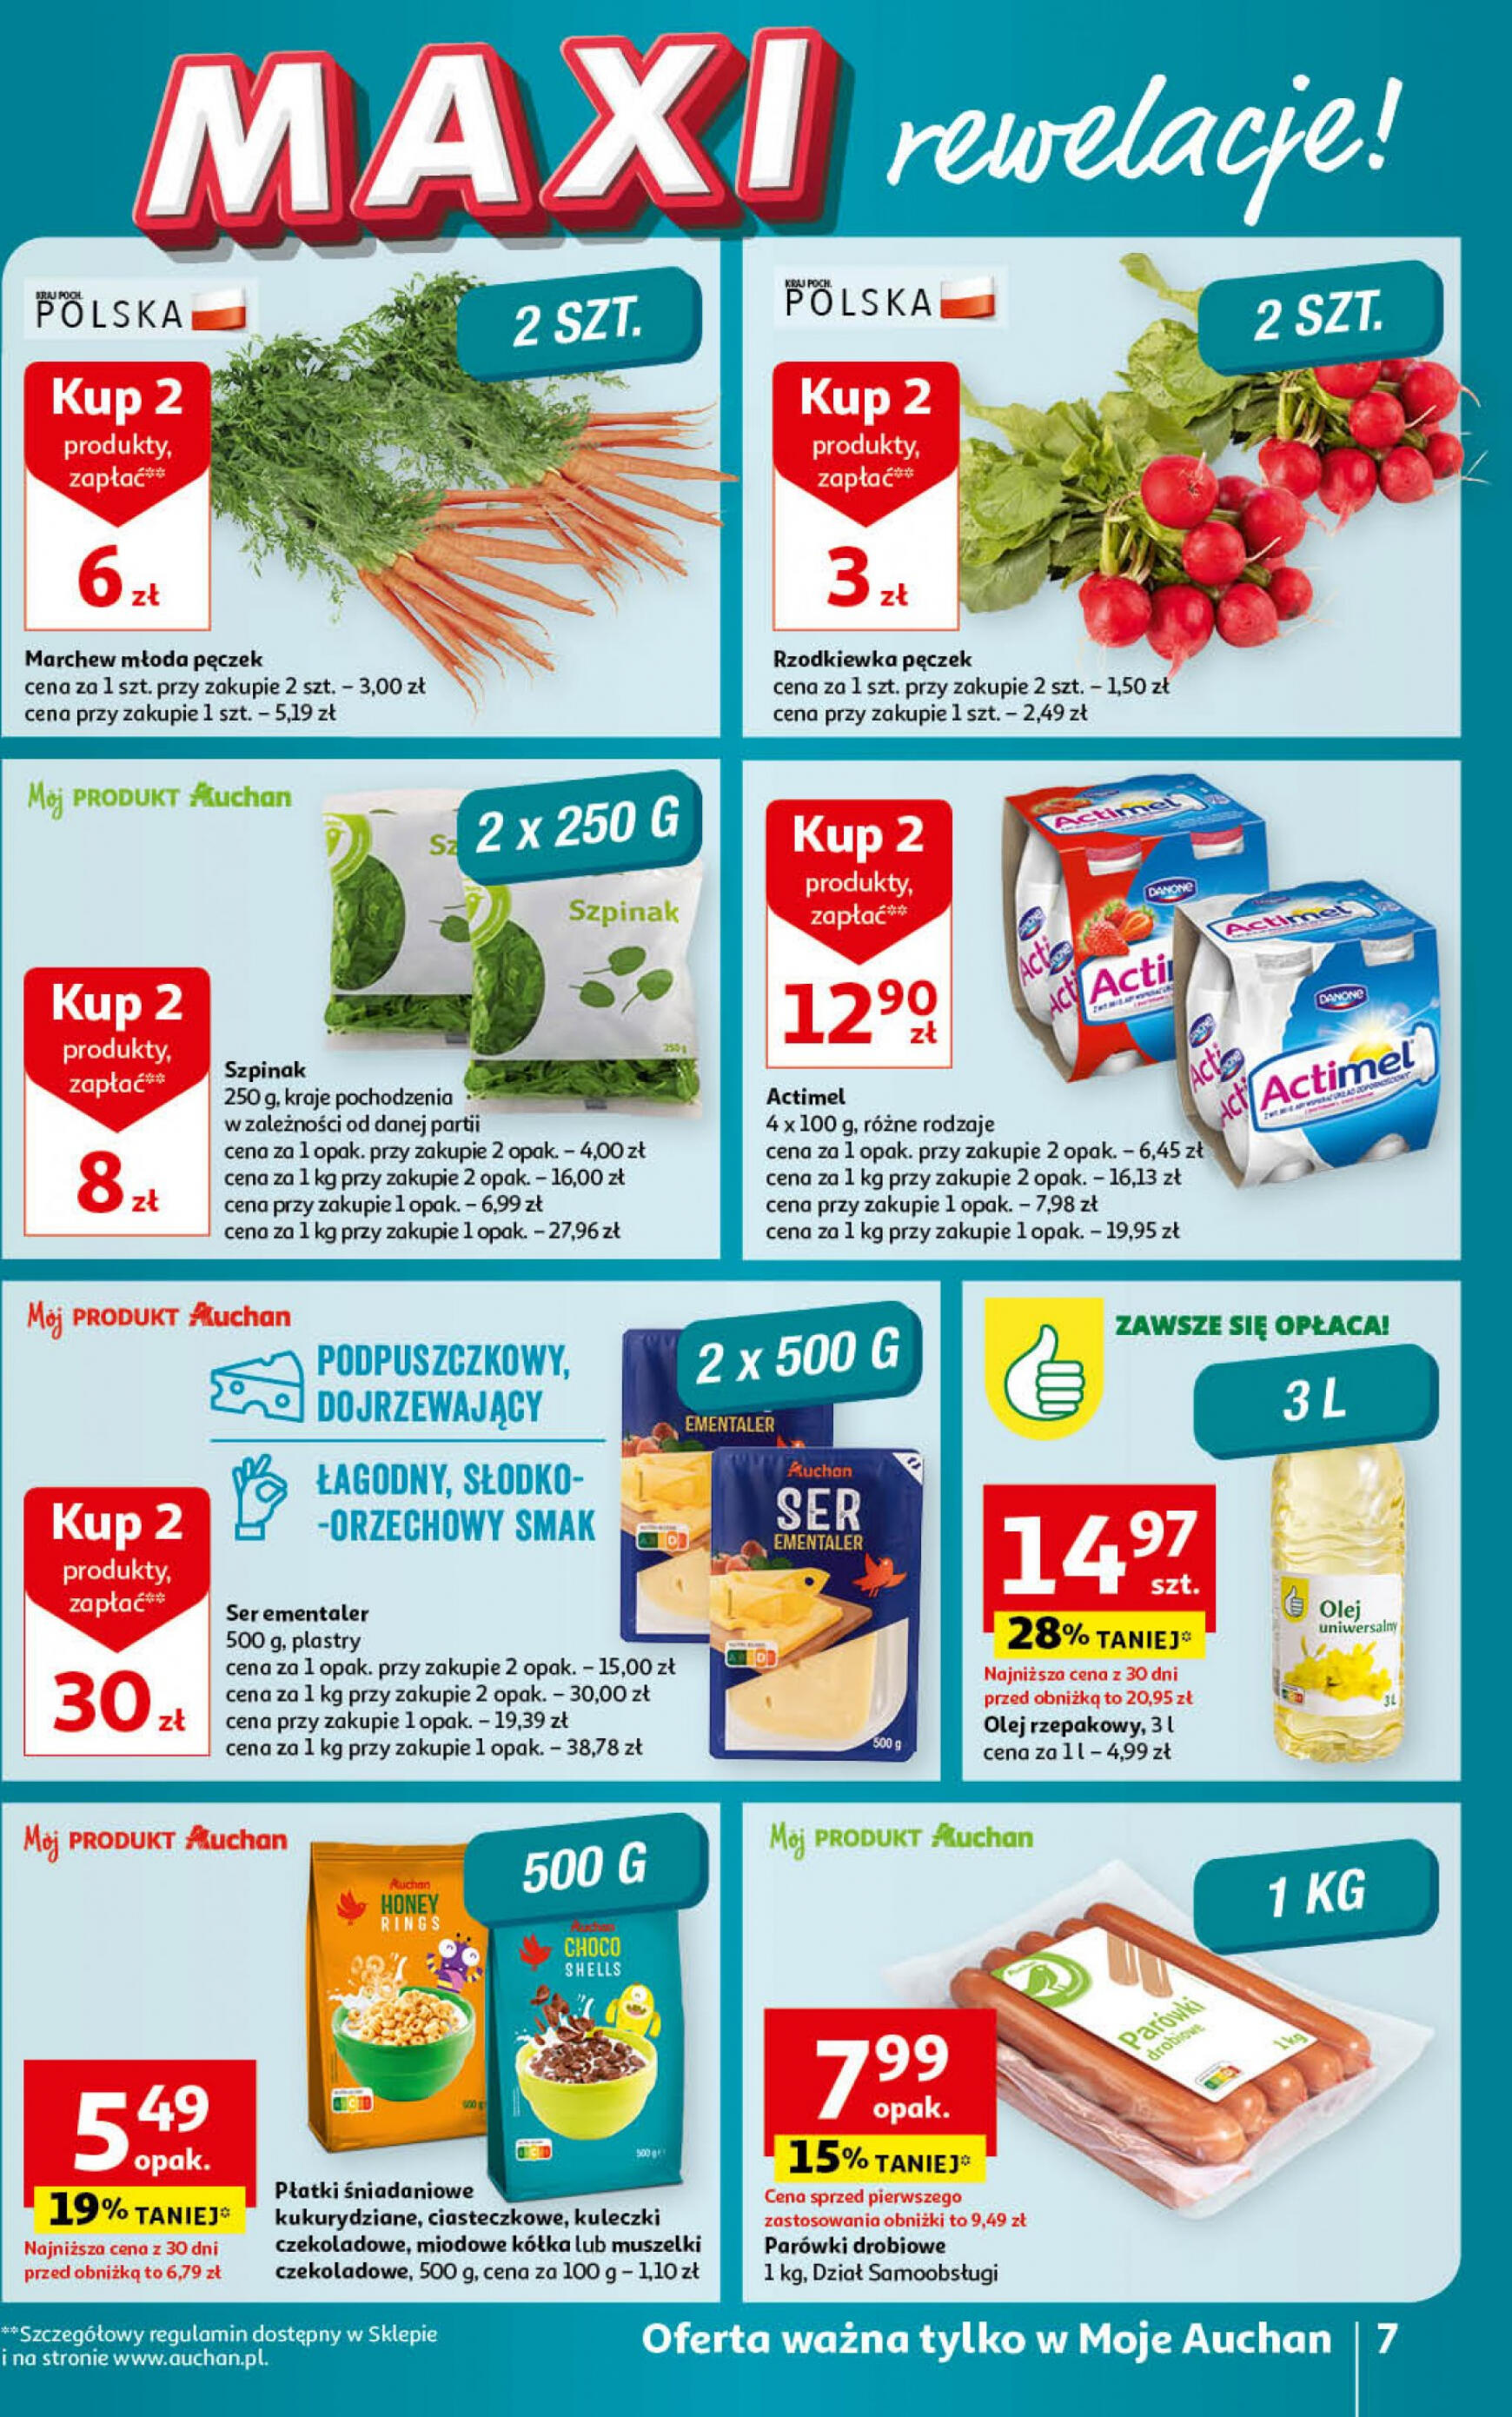 auchan - Moje Auchan gazetka aktualna ważna od 16.05. - 22.05. - page: 7